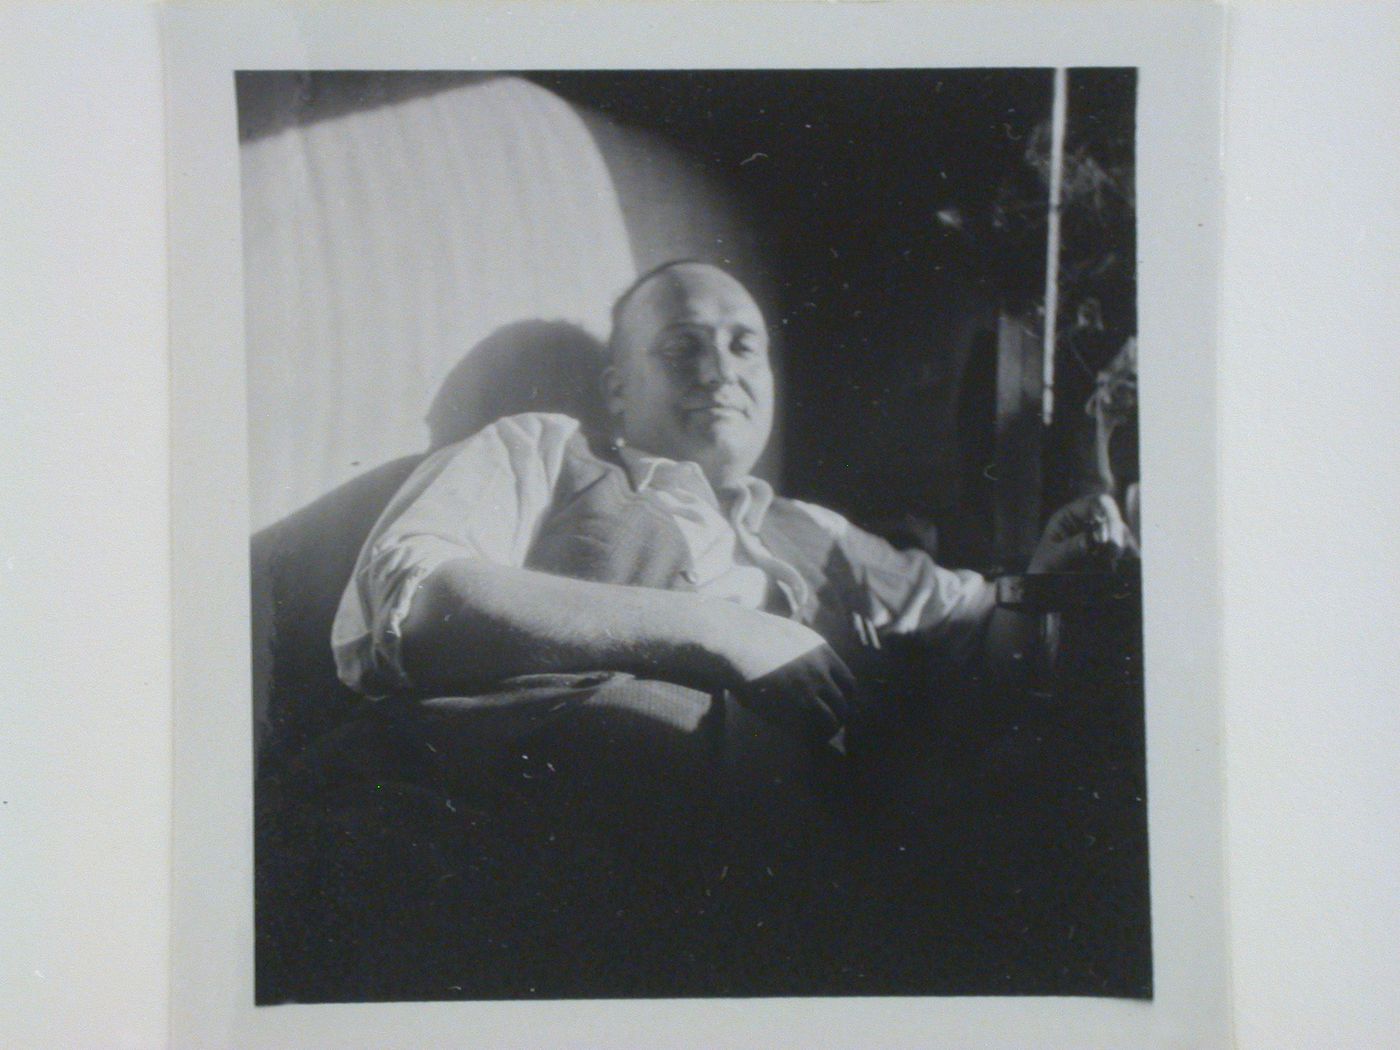 Portrait of Mr Delay, a French architect, in a train car